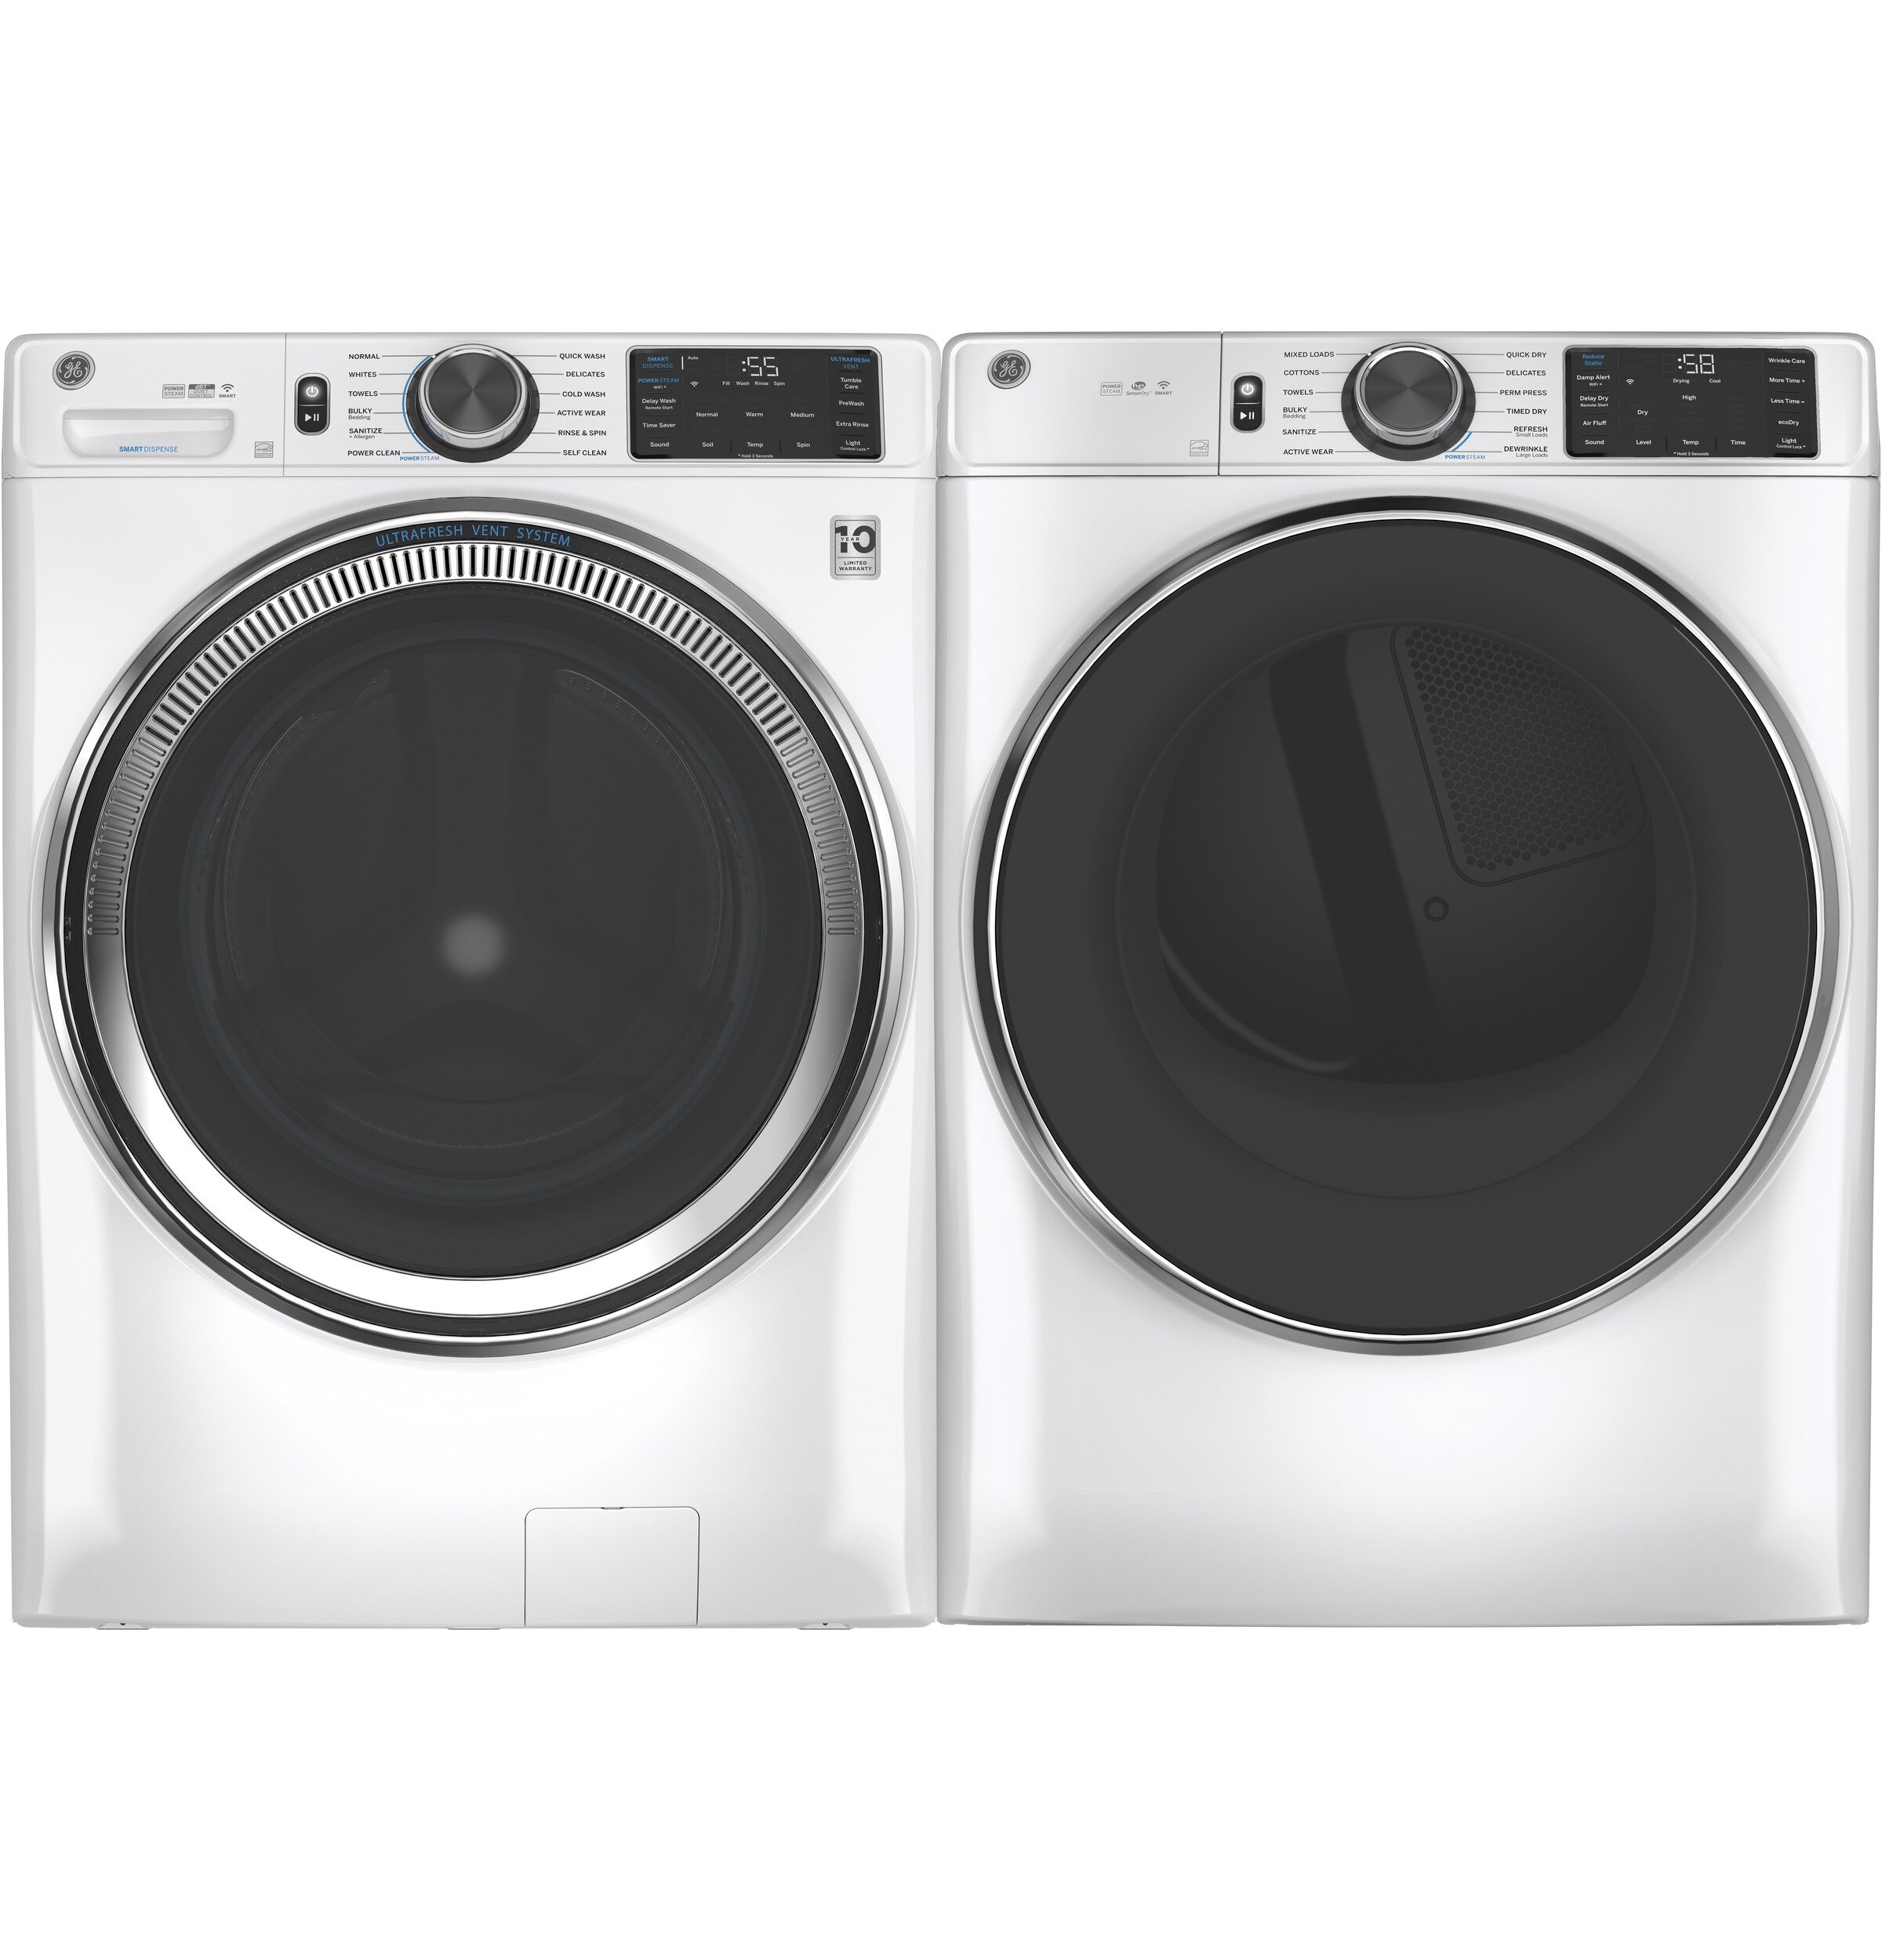 Washer & Dryers, Appliances